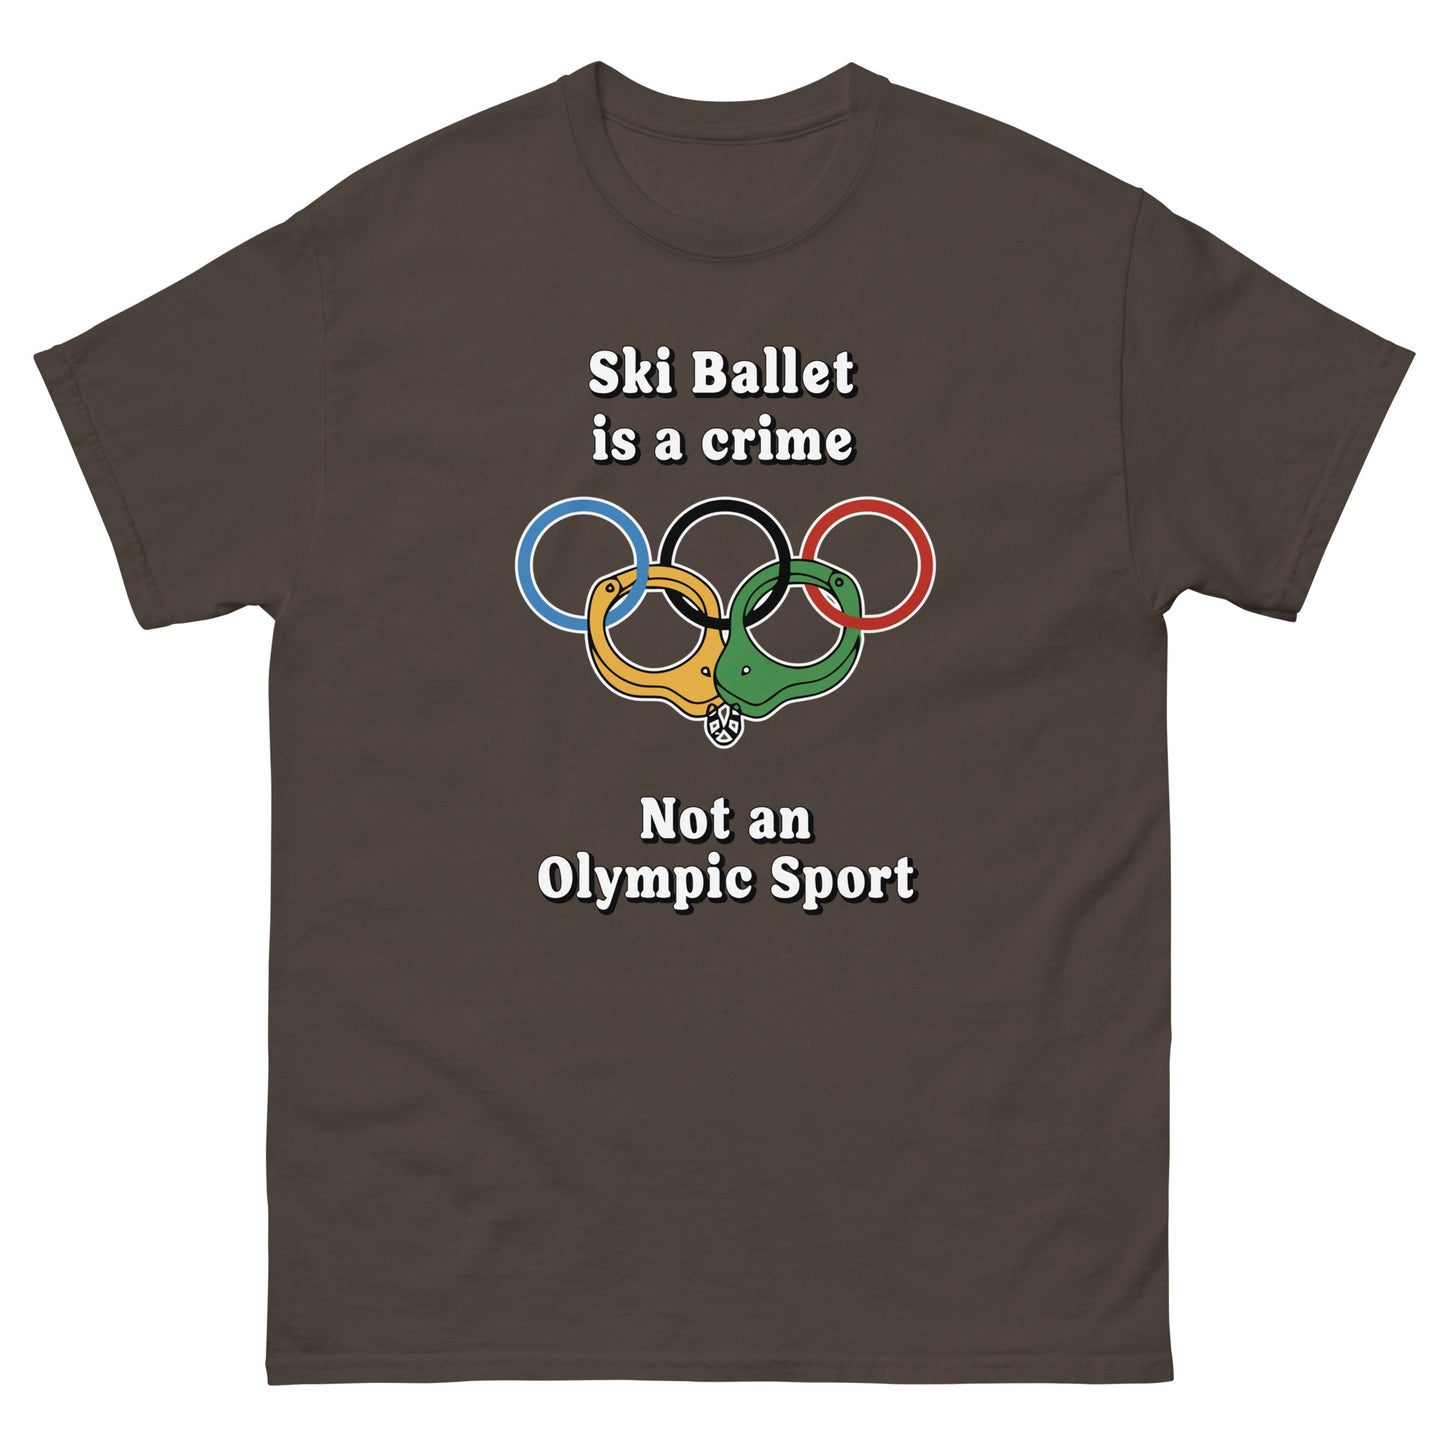 Ski Ballet is a Crime T-shirt